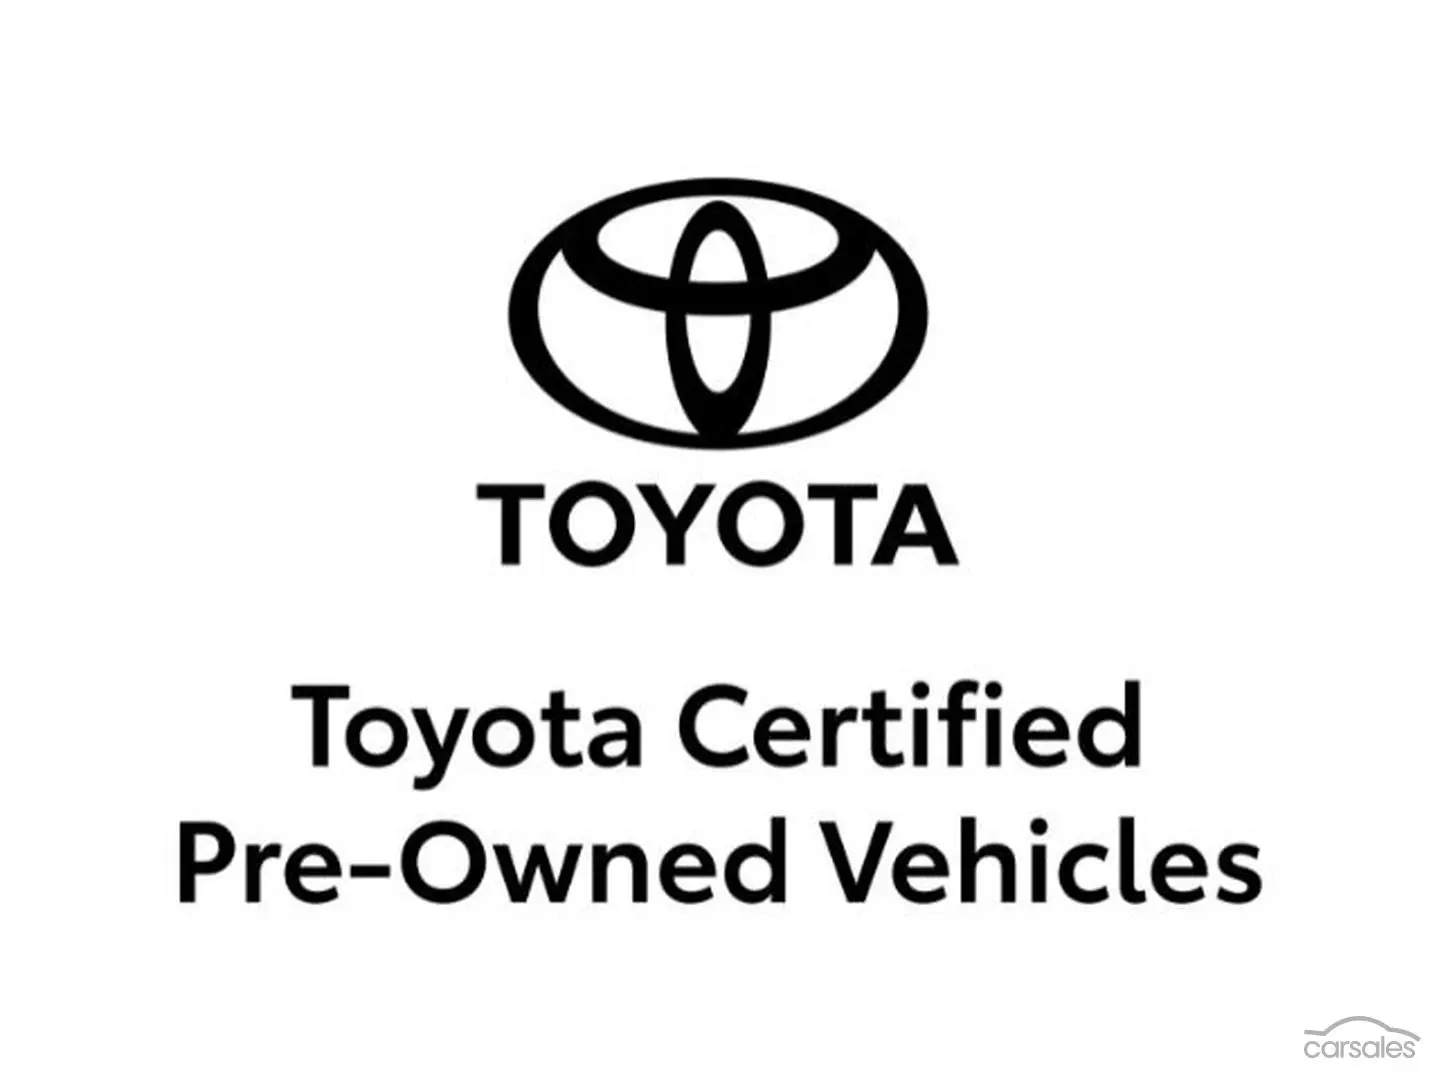 2019 Toyota Camry Image 1